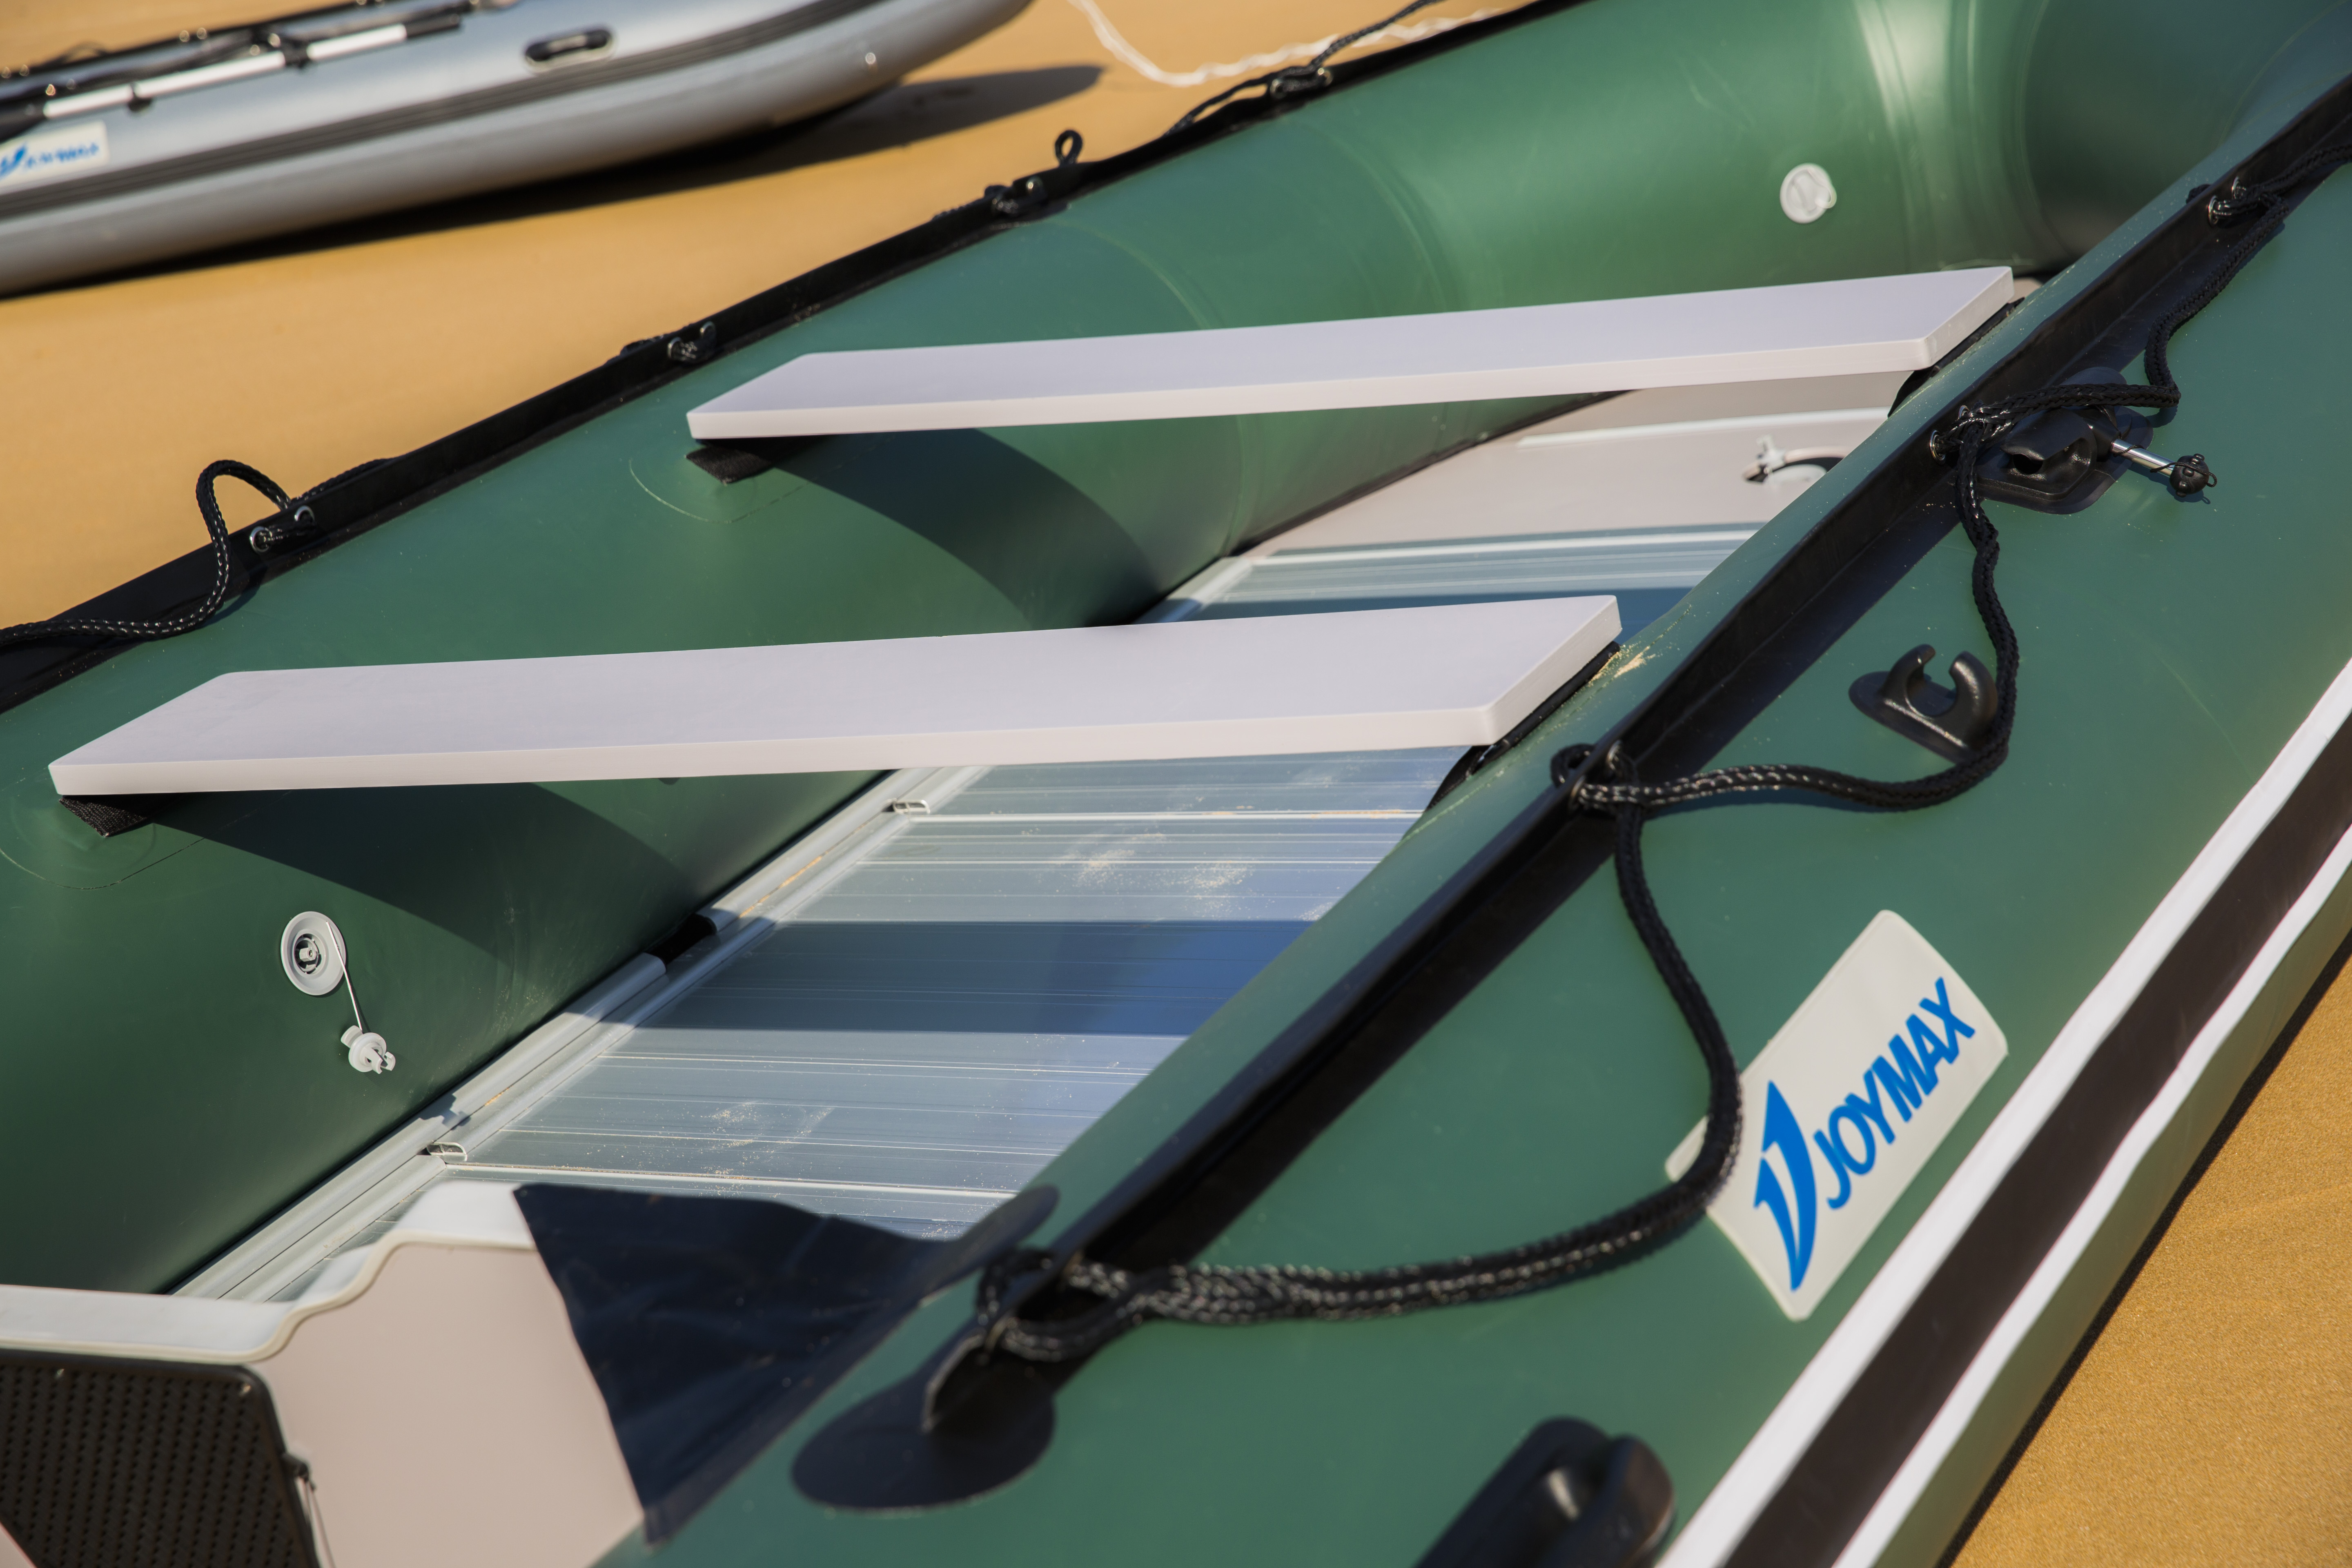 Marine Awning Sunshade Tent Aluminium Floor inflatable boat